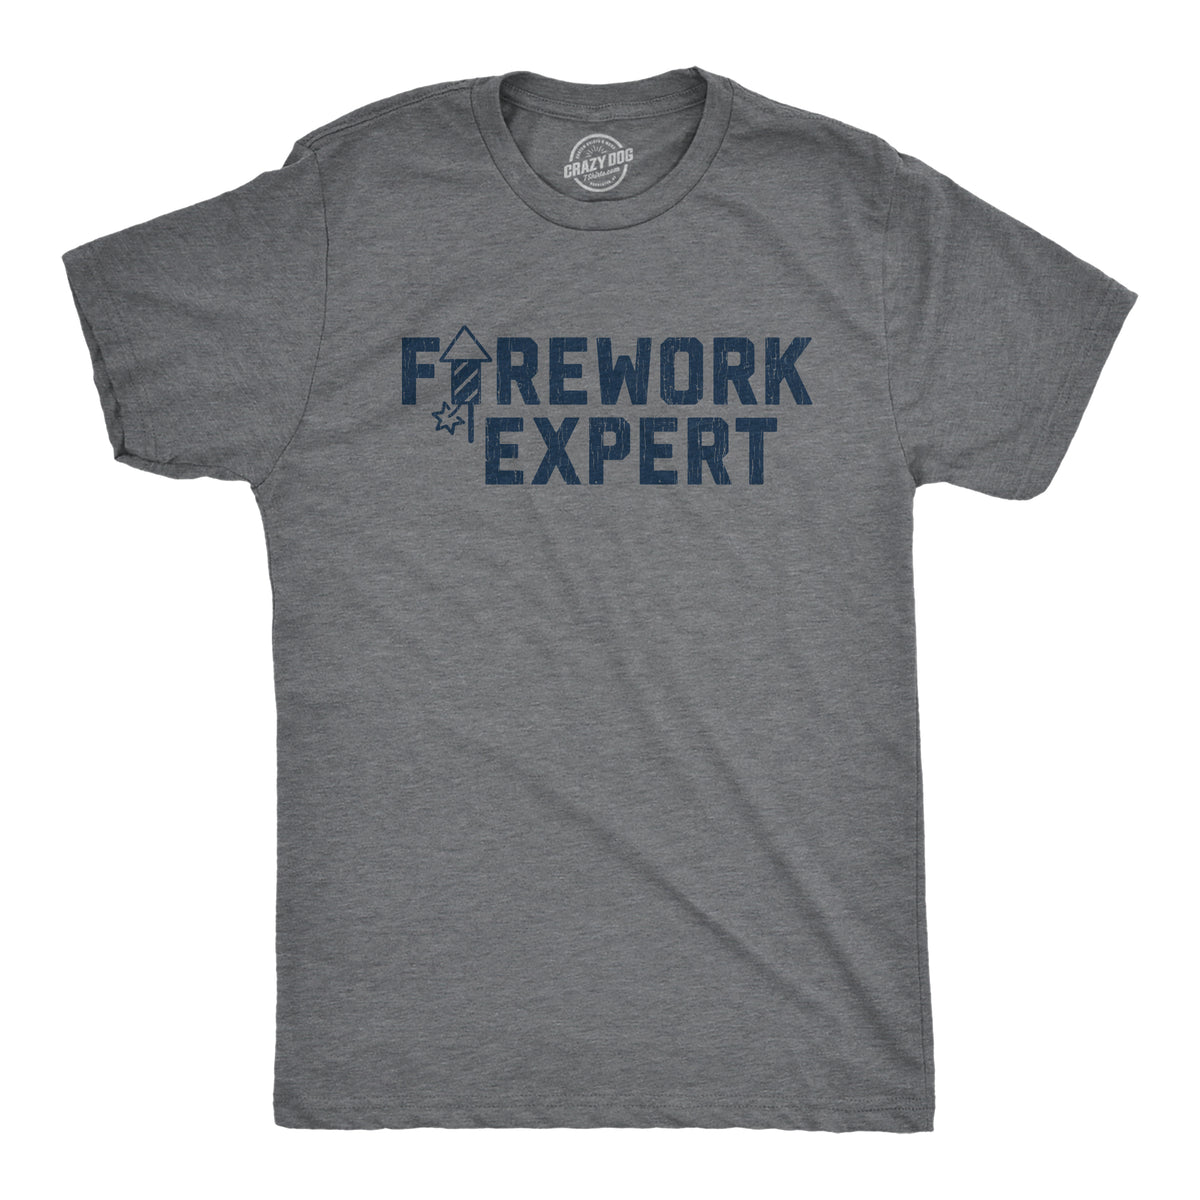 Funny Dark Heather Grey - Expert Firework Expert Mens T Shirt Nerdy Fourth of July Tee